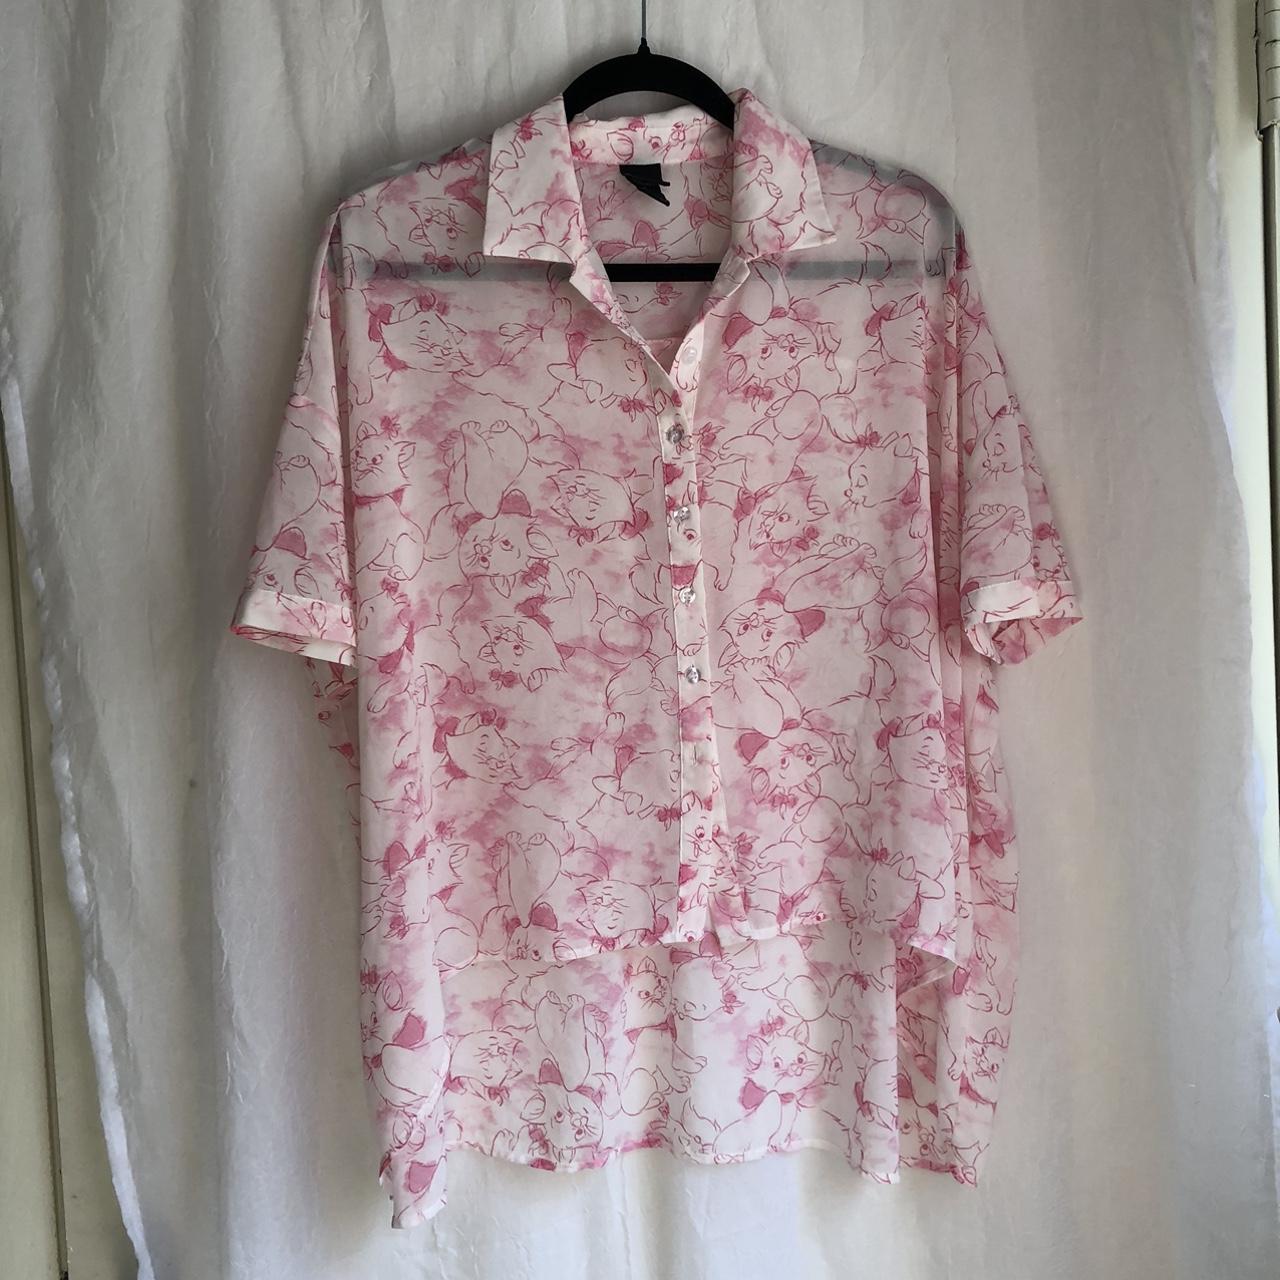 Disney Women's Pink and White Shirt | Depop